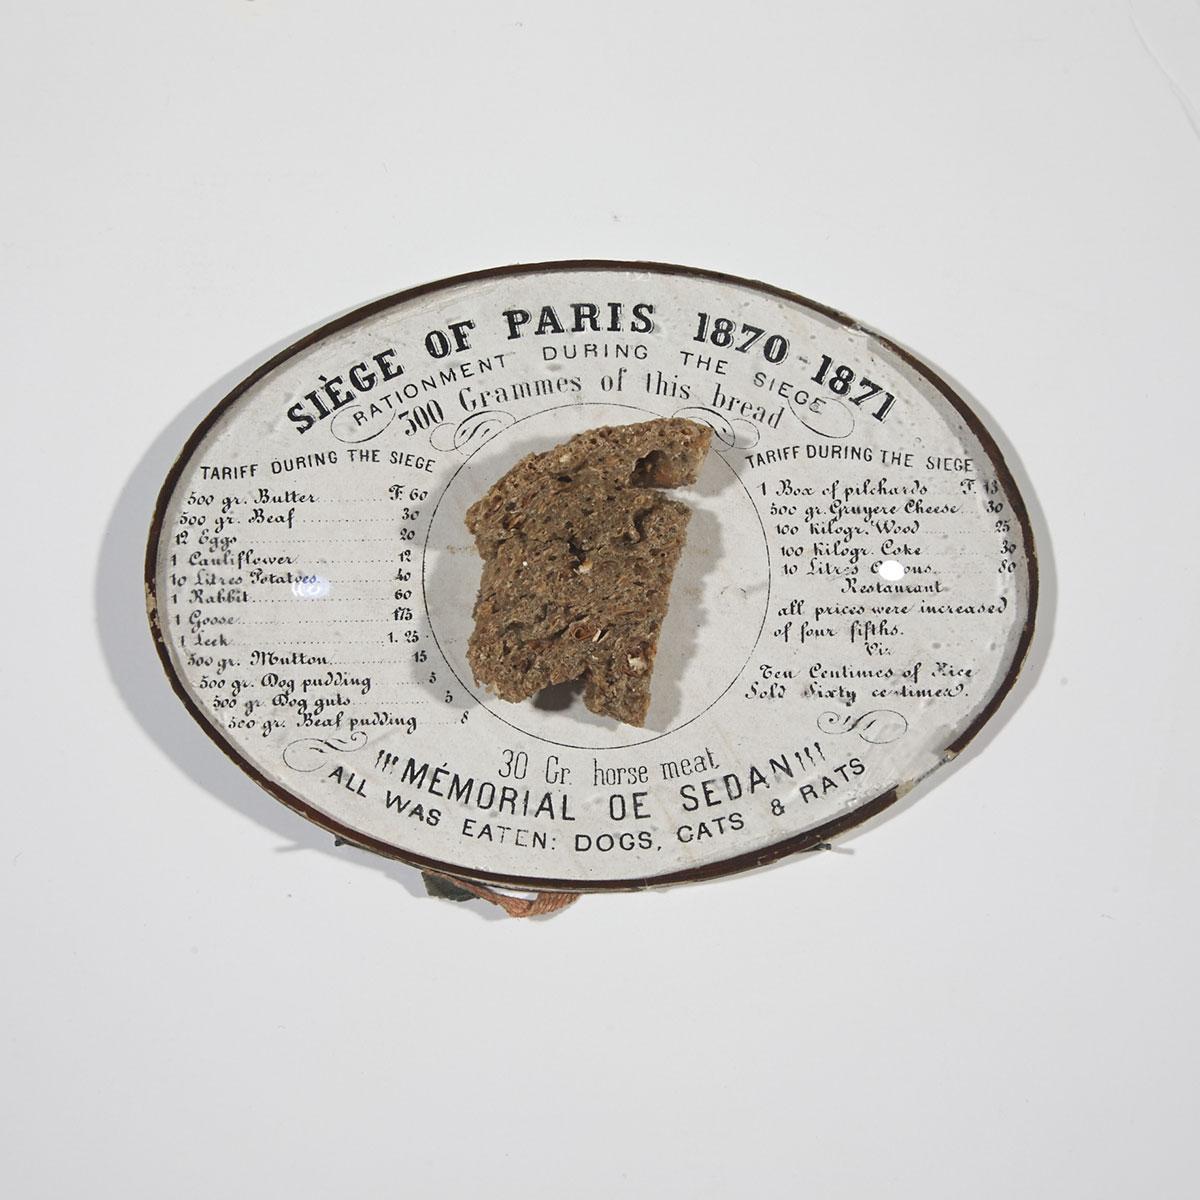 Siège of Paris Commemorative Bread Ration, 19th century